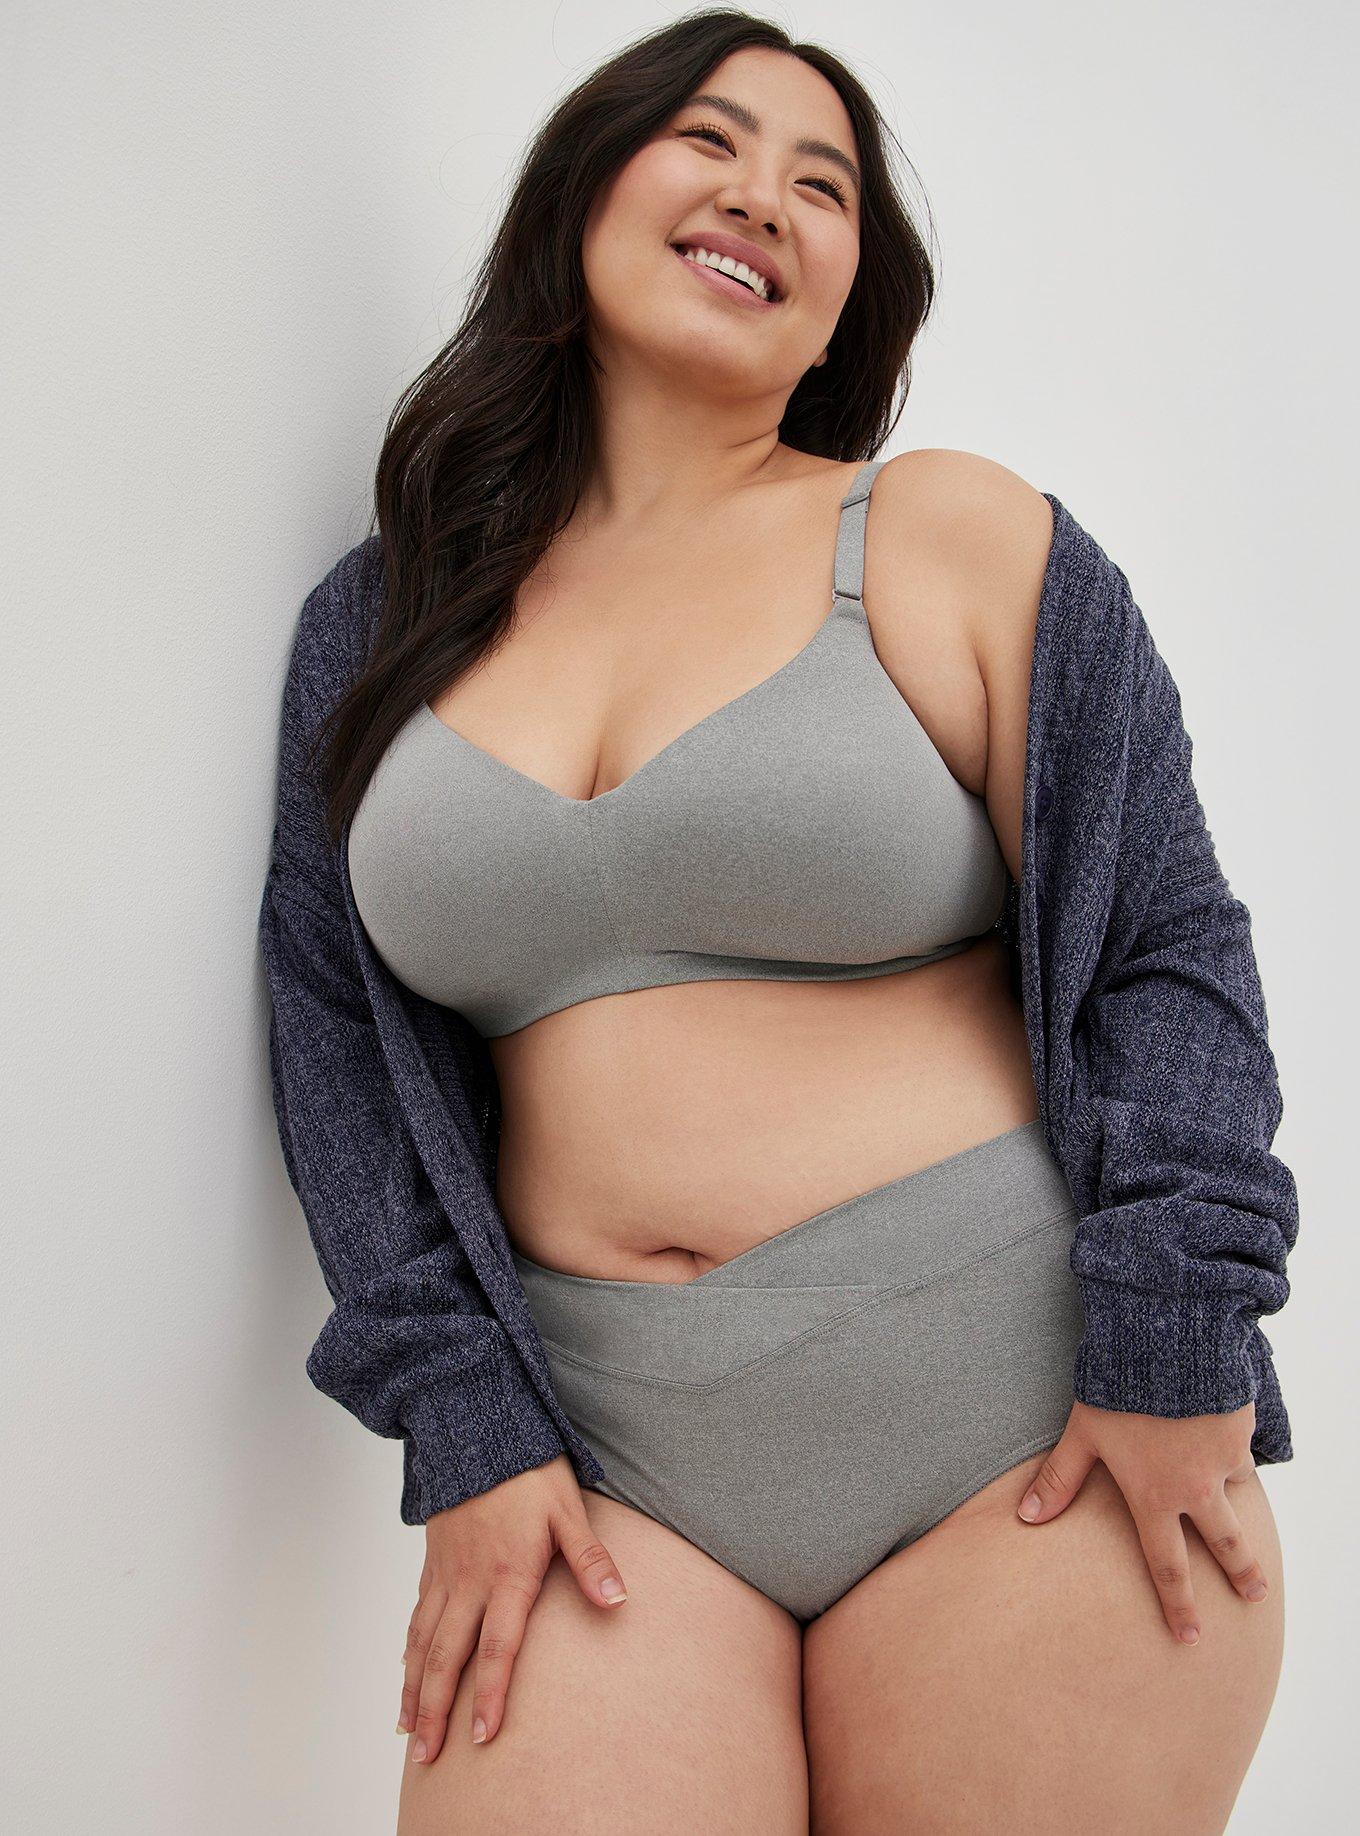 Dream Fit Women's Full Figure Cotton Plunge Bra, Size: 46DDD, Gray